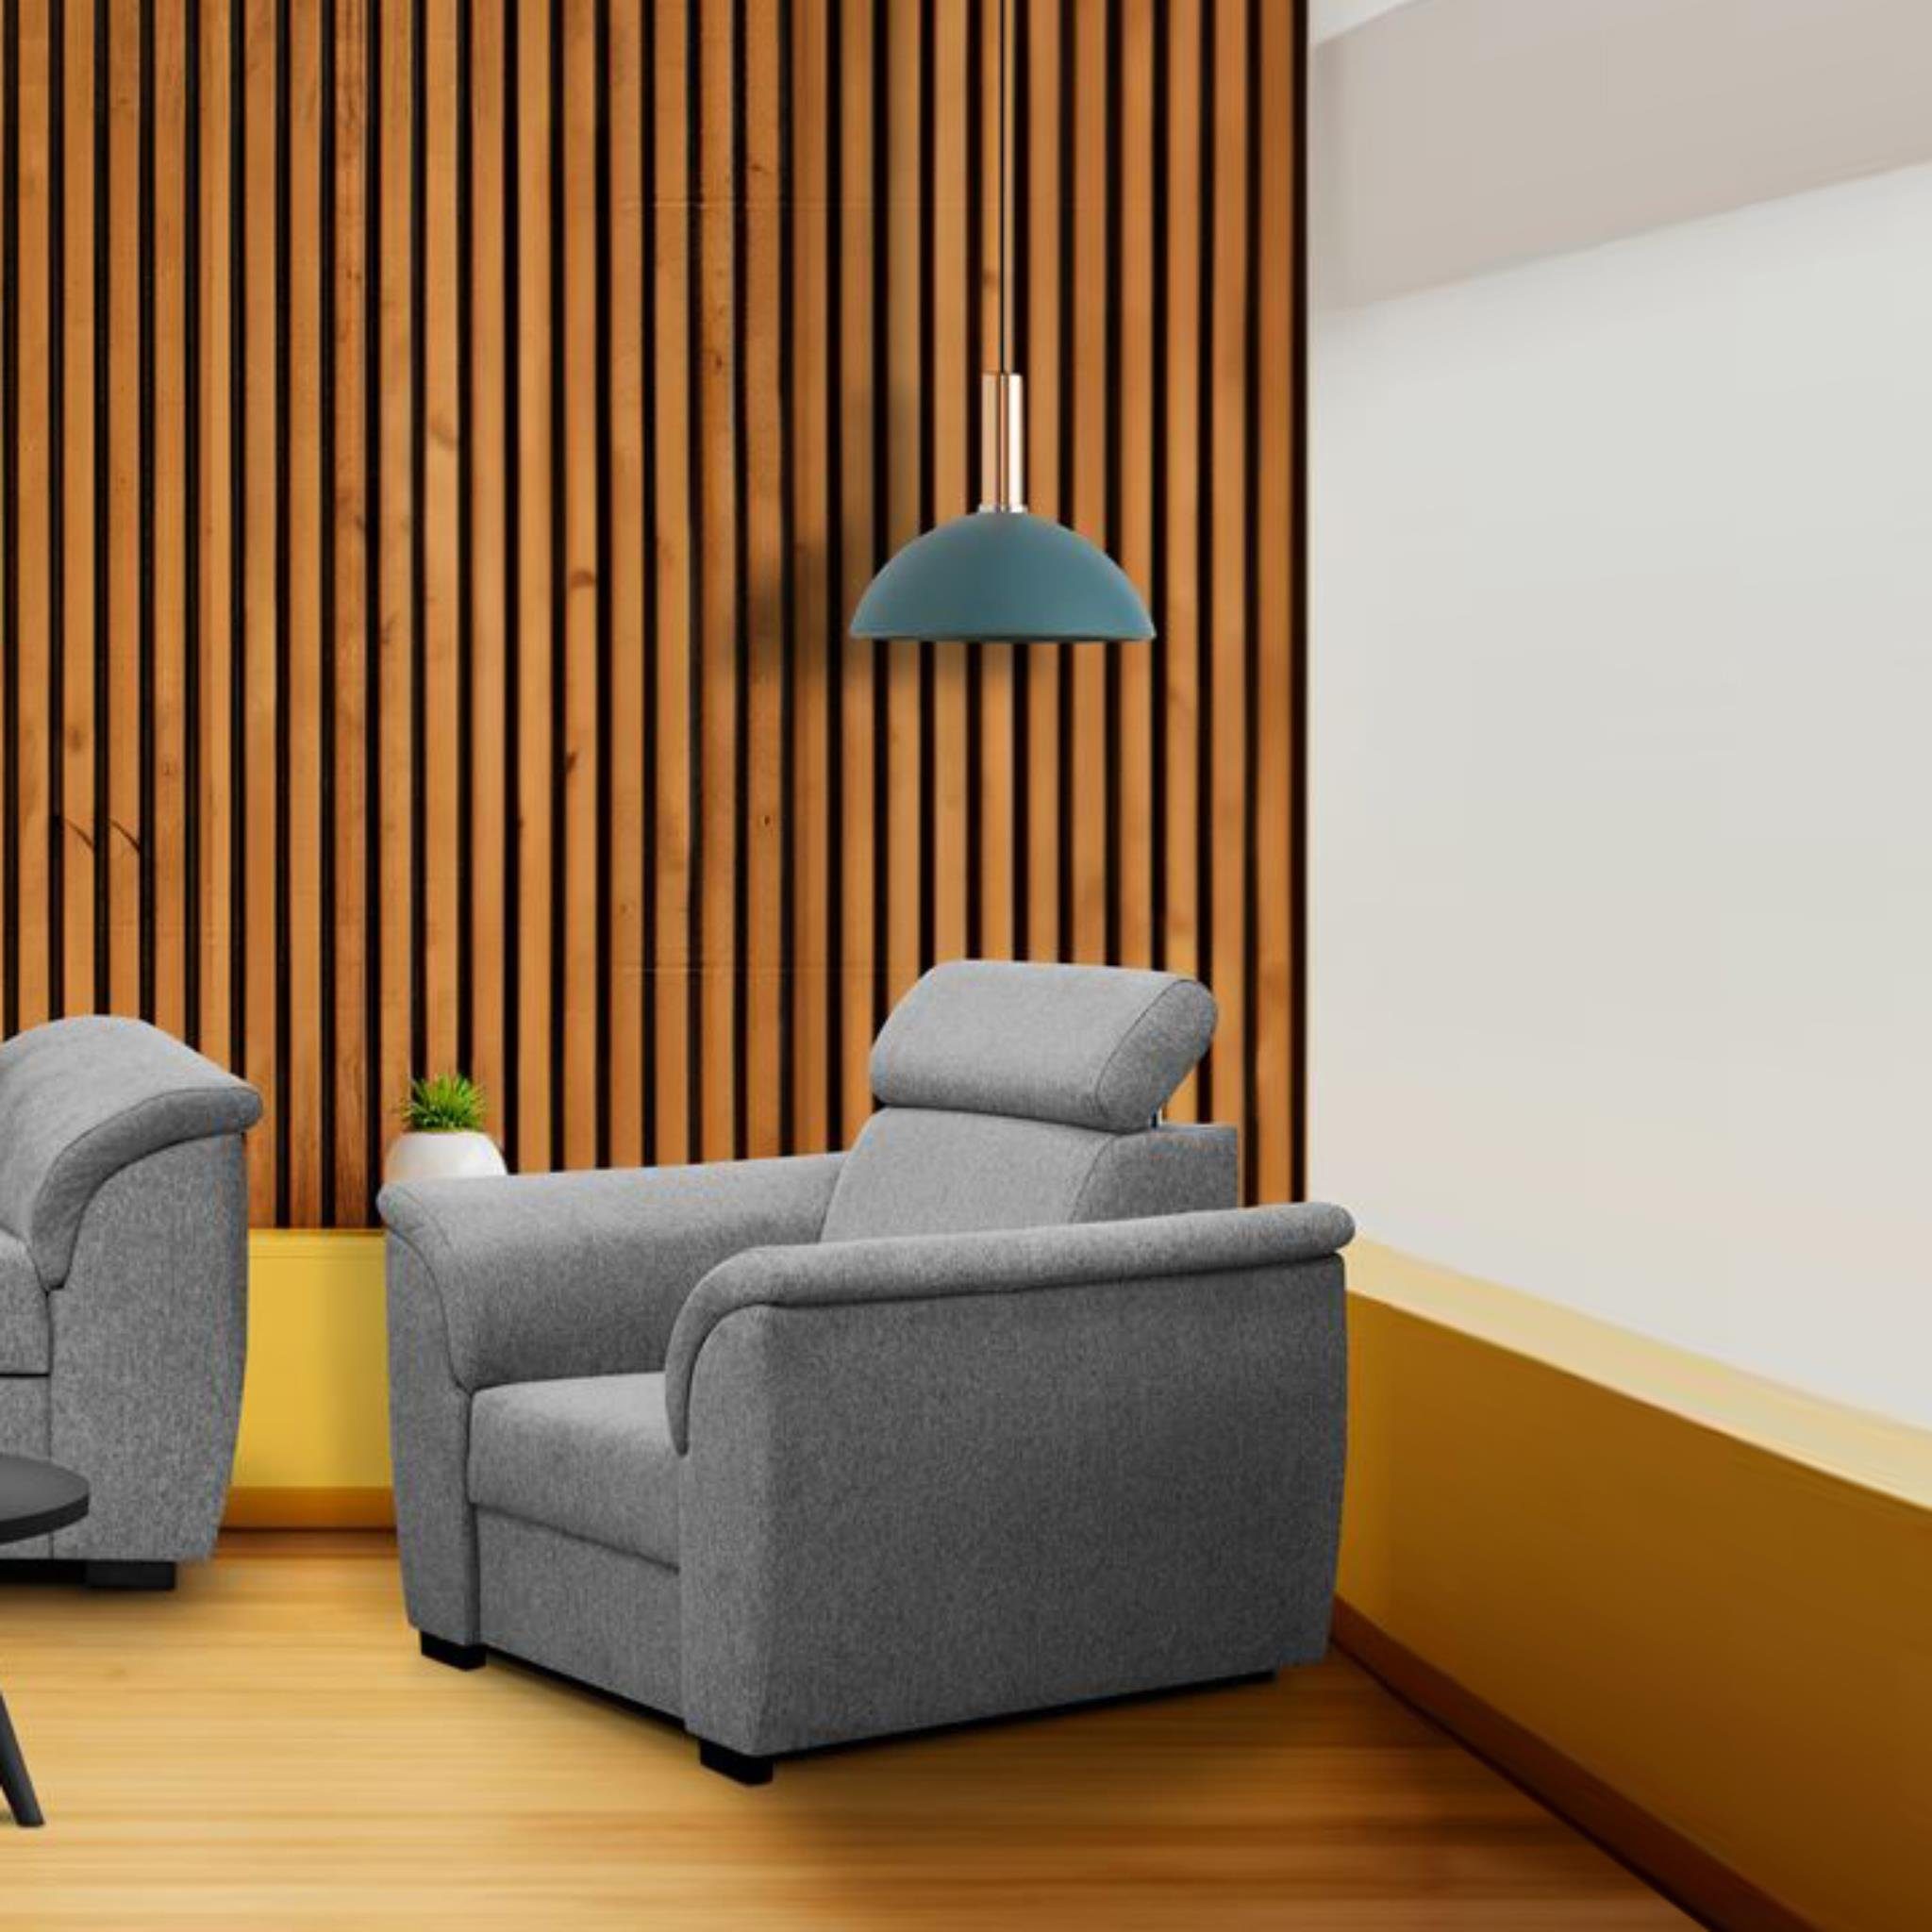 Beautysofa Relaxsessel Madera (modern Lounge Polstersessel mit Wellenfedern), stilvoll Sessel mit verstellbare Kopfstütze Grau (matana 03) | Sessel